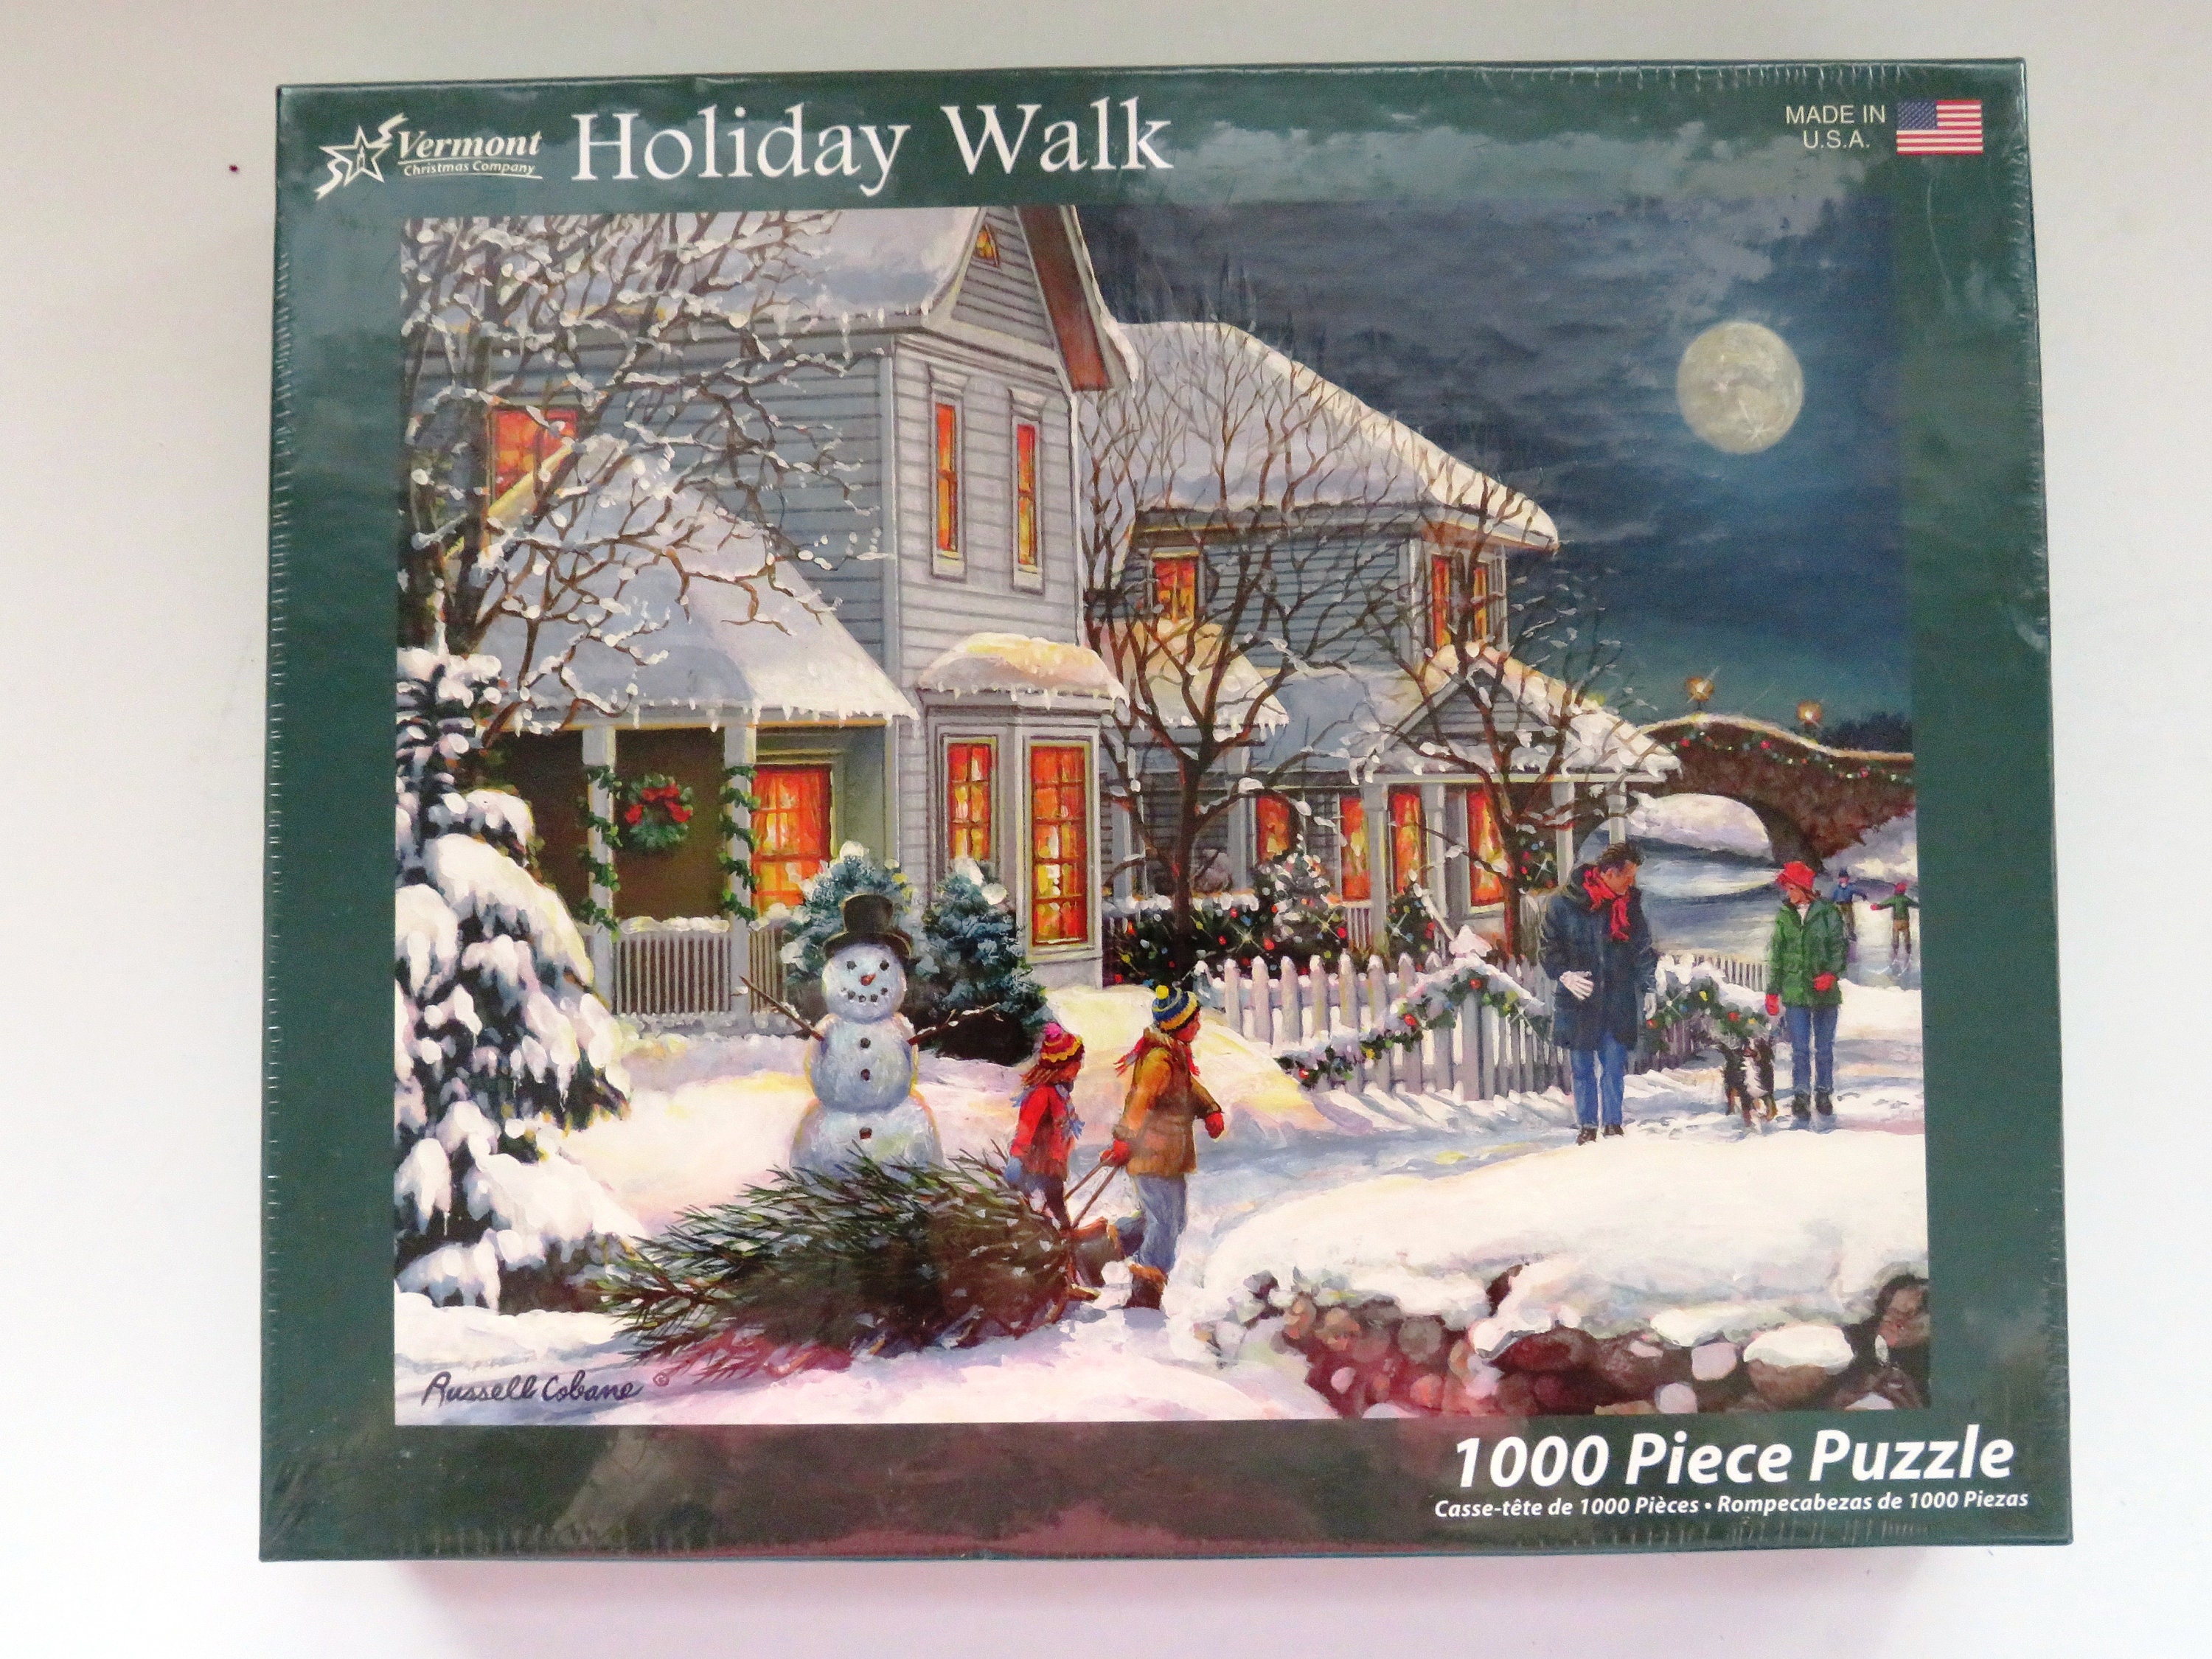 Zen Garden Jigsaw Puzzle 1000 Piece by Vermont Christmas Company